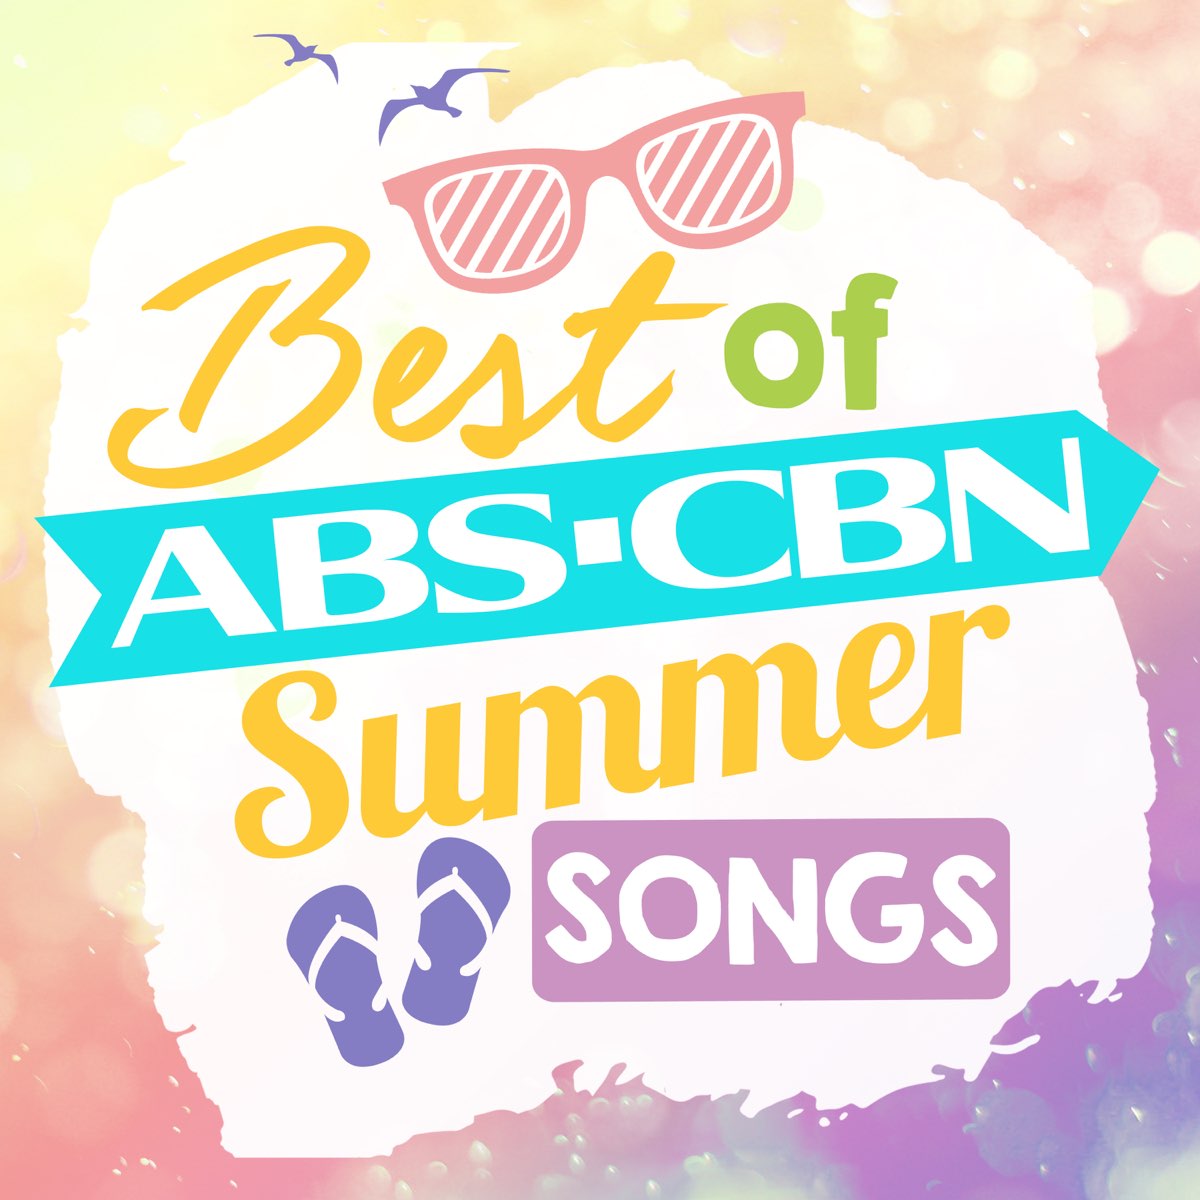 Песни май саммер. Песня Summer. Песни Summer. Summertime песня. Lingokids Lets celebrate best Songs.